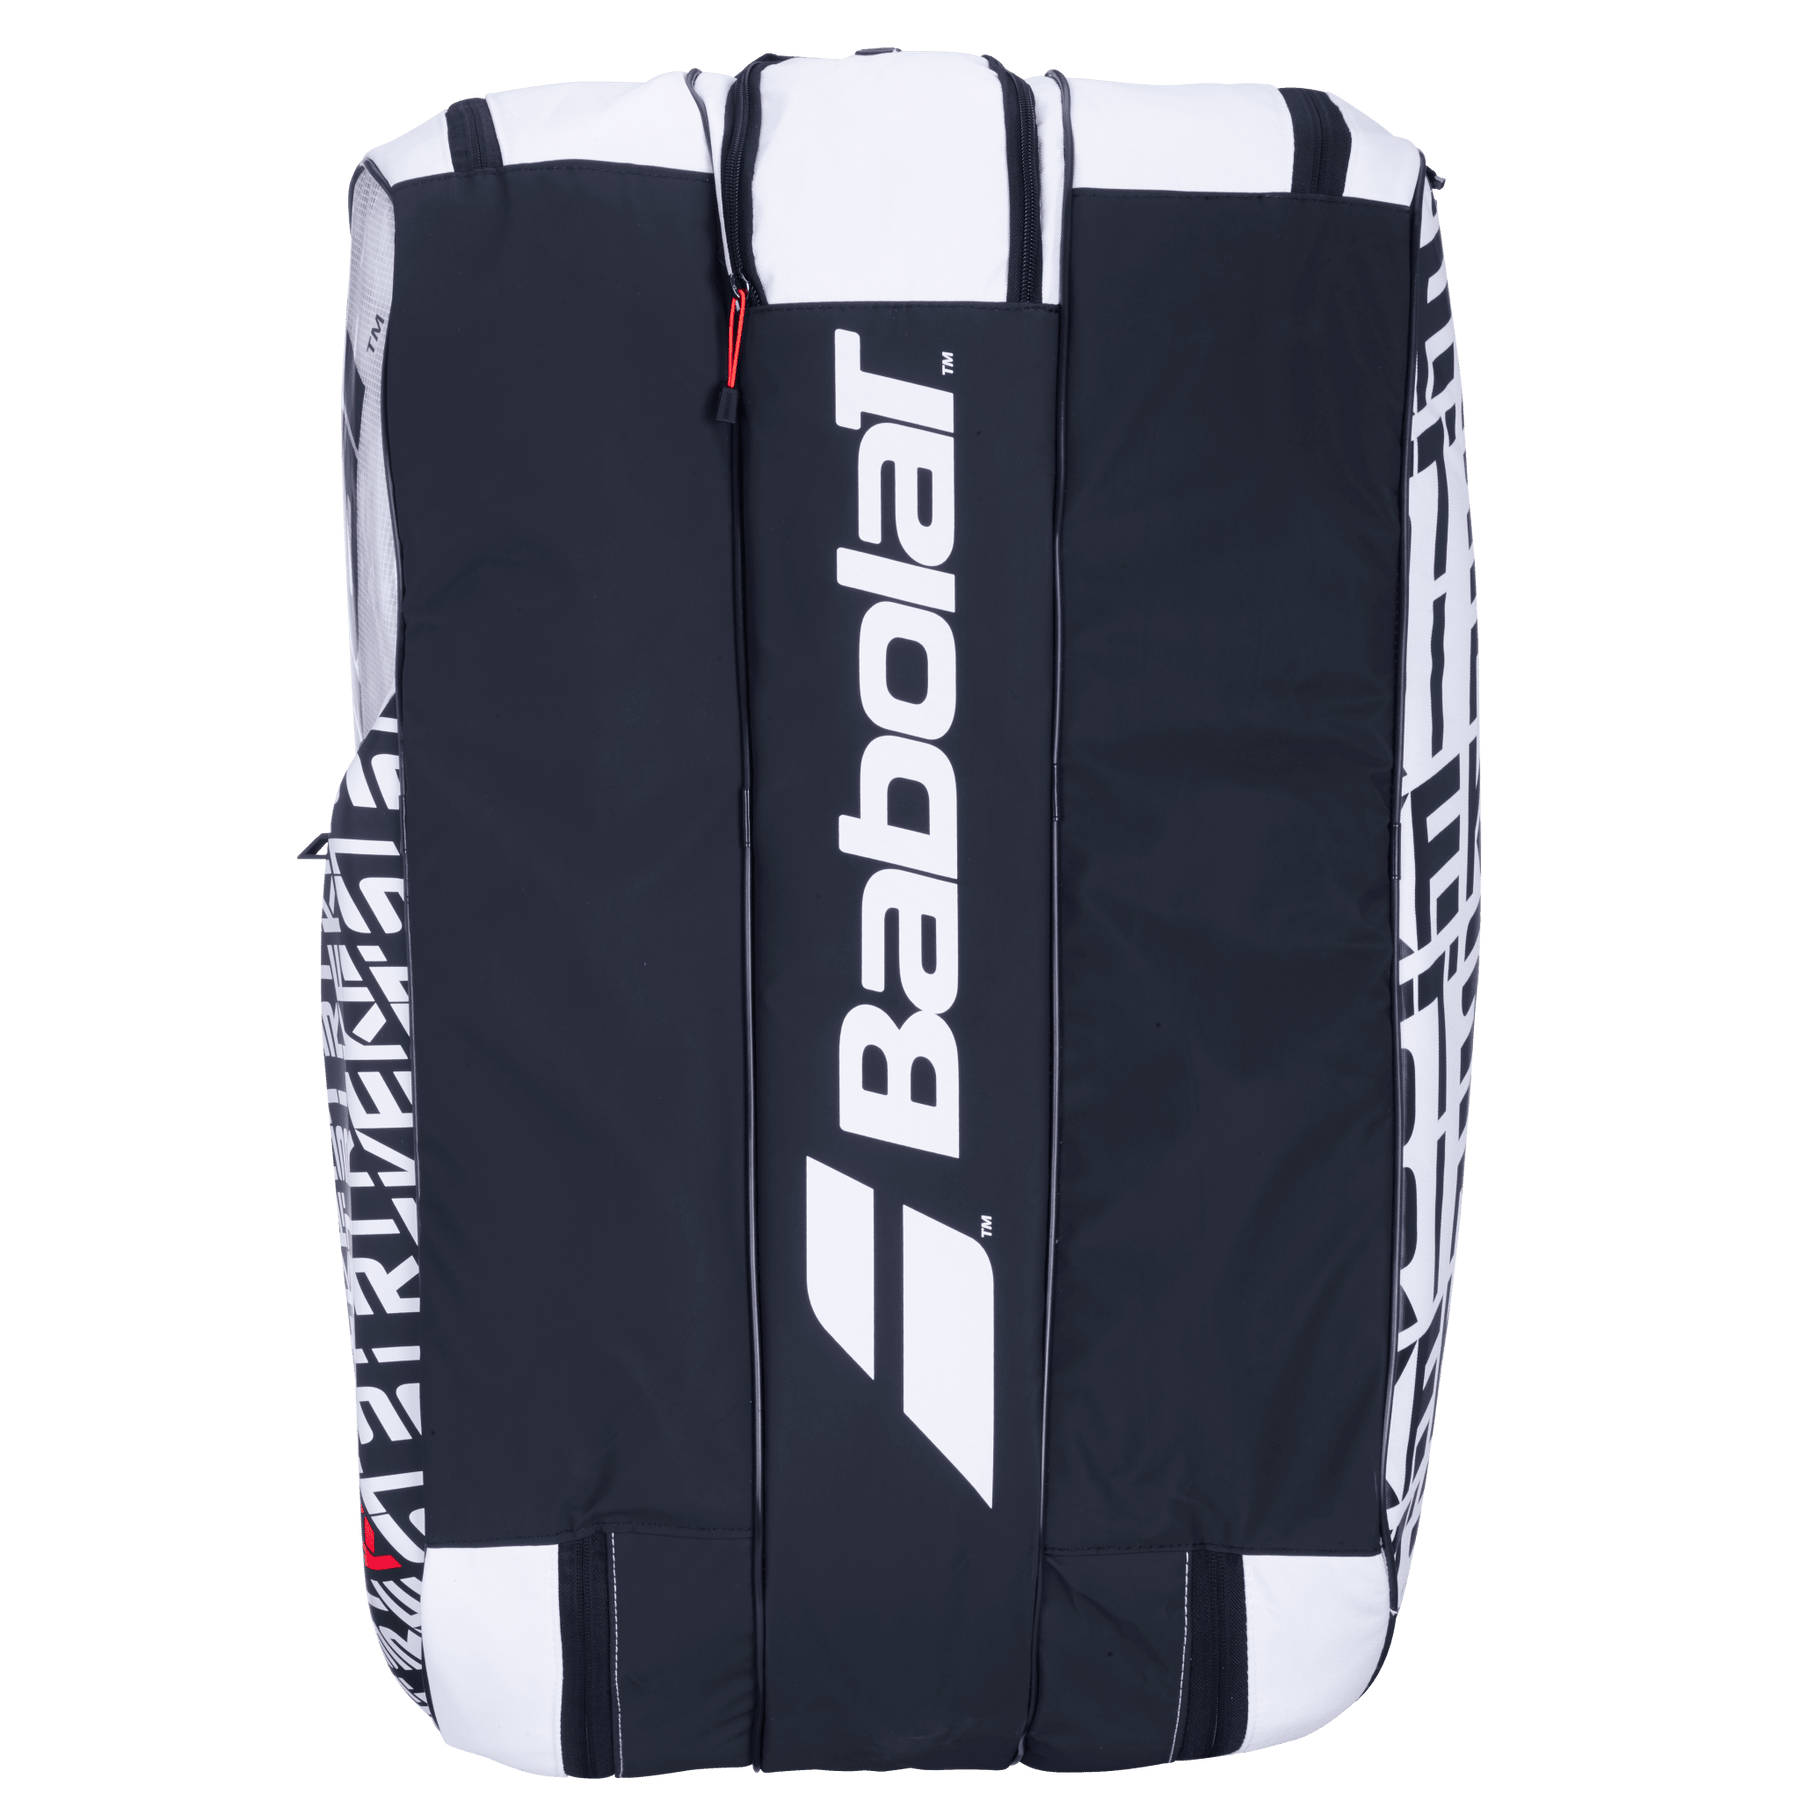 Babolat Racket Holderx12 Pure Strike 751201 2019